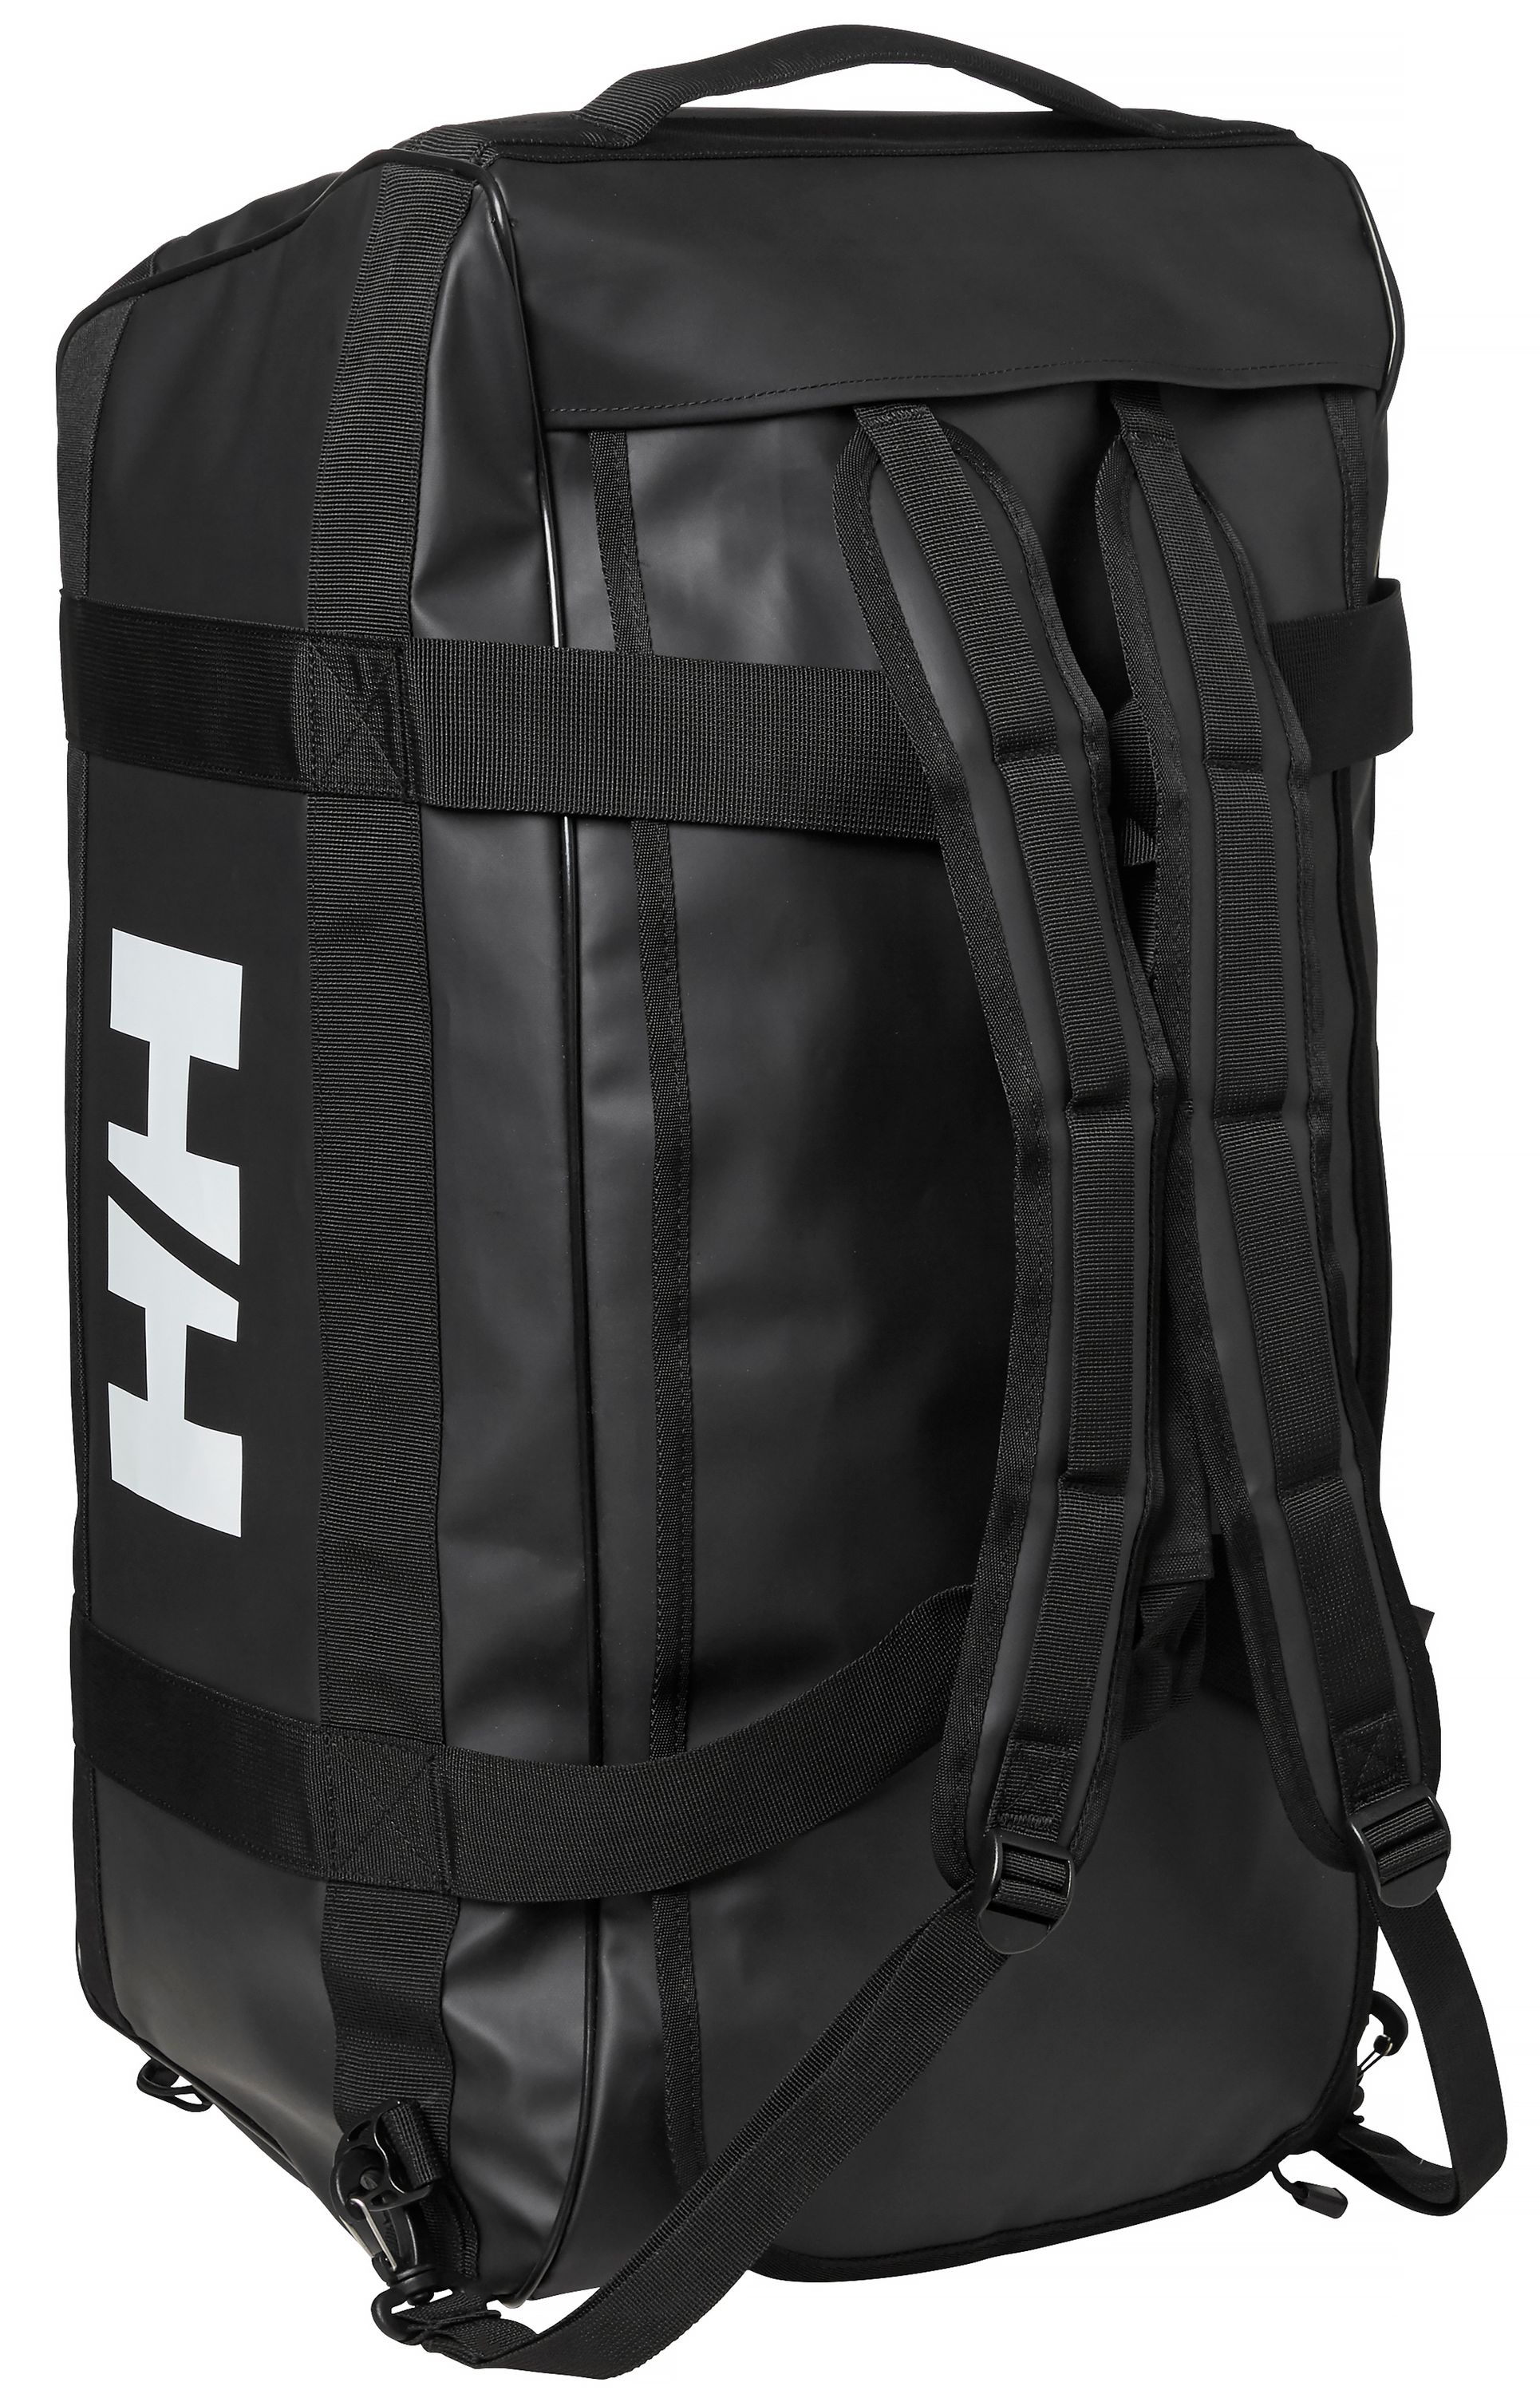 Køb HH Scout Duffel Bag 70L | Watski.dk